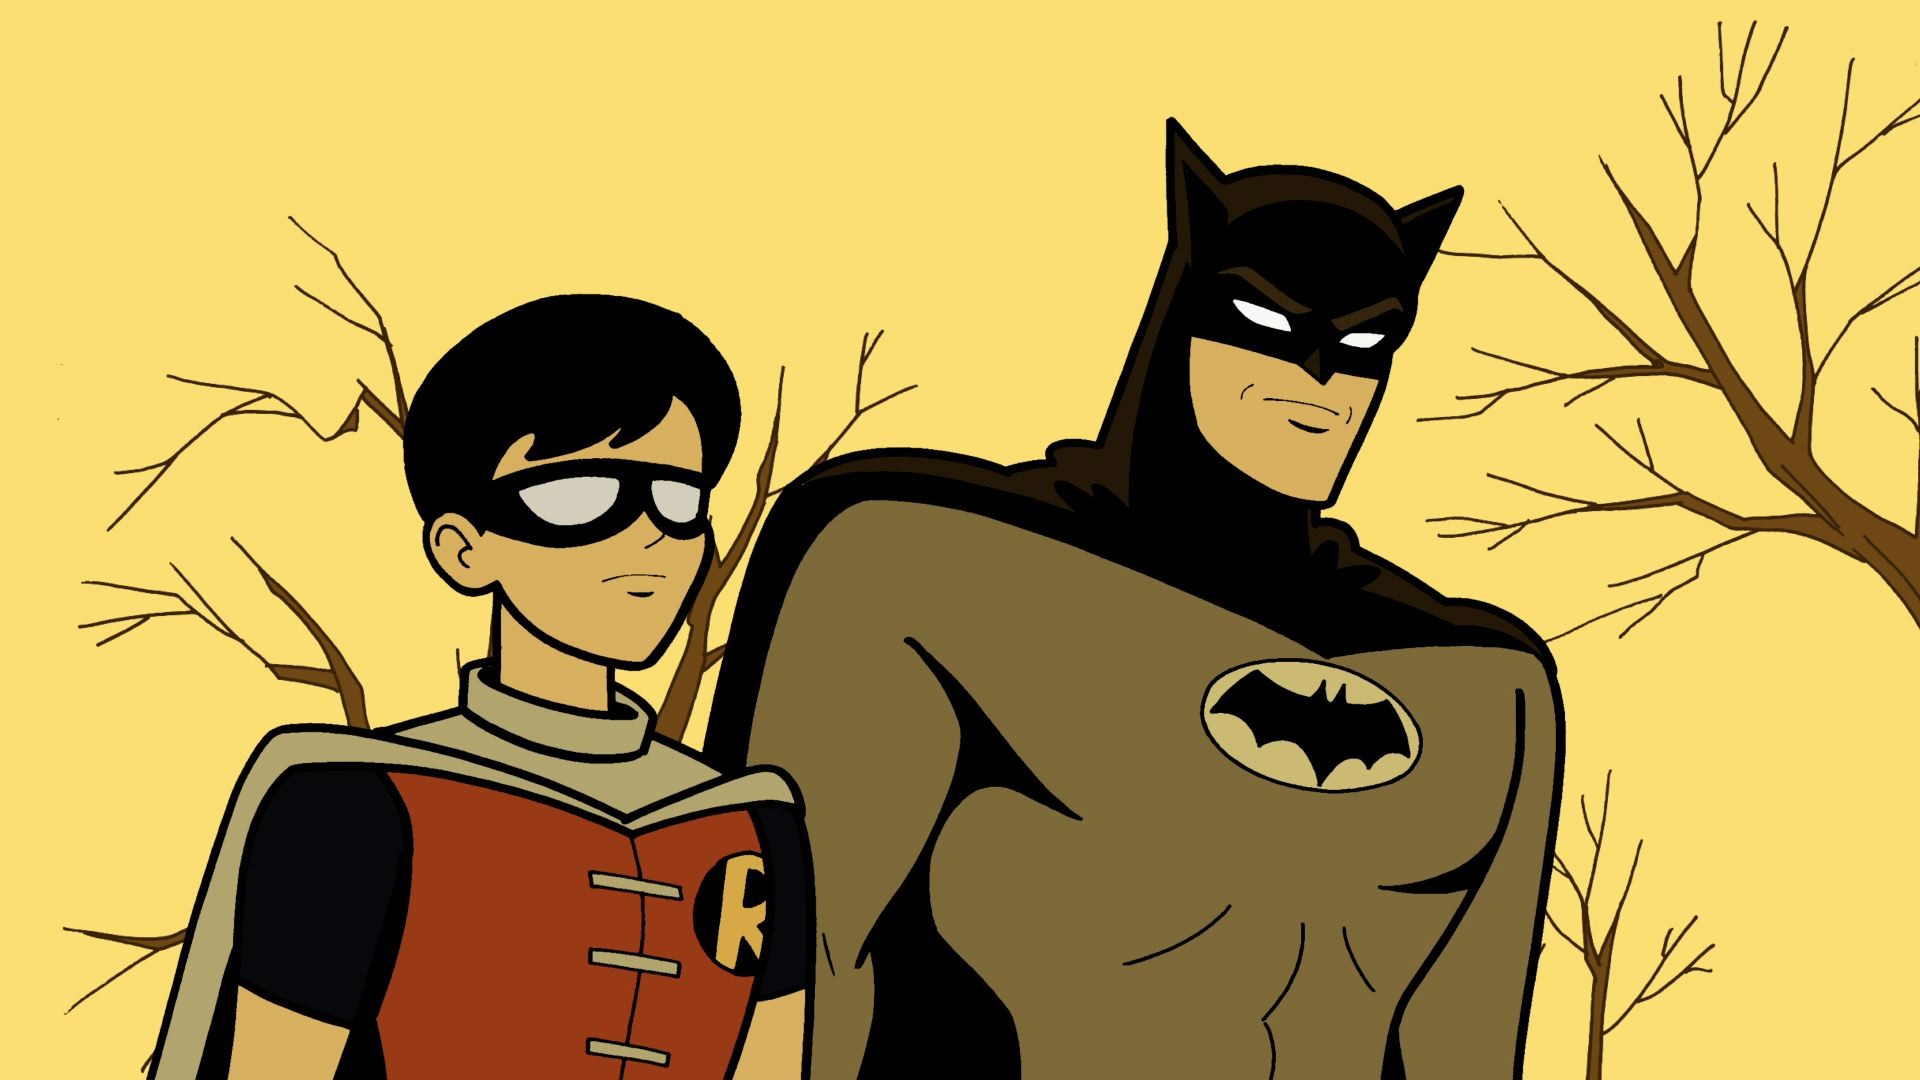 Batman The Brave & and the Bold - Batman Wallpaper (8650159) - Fanpop